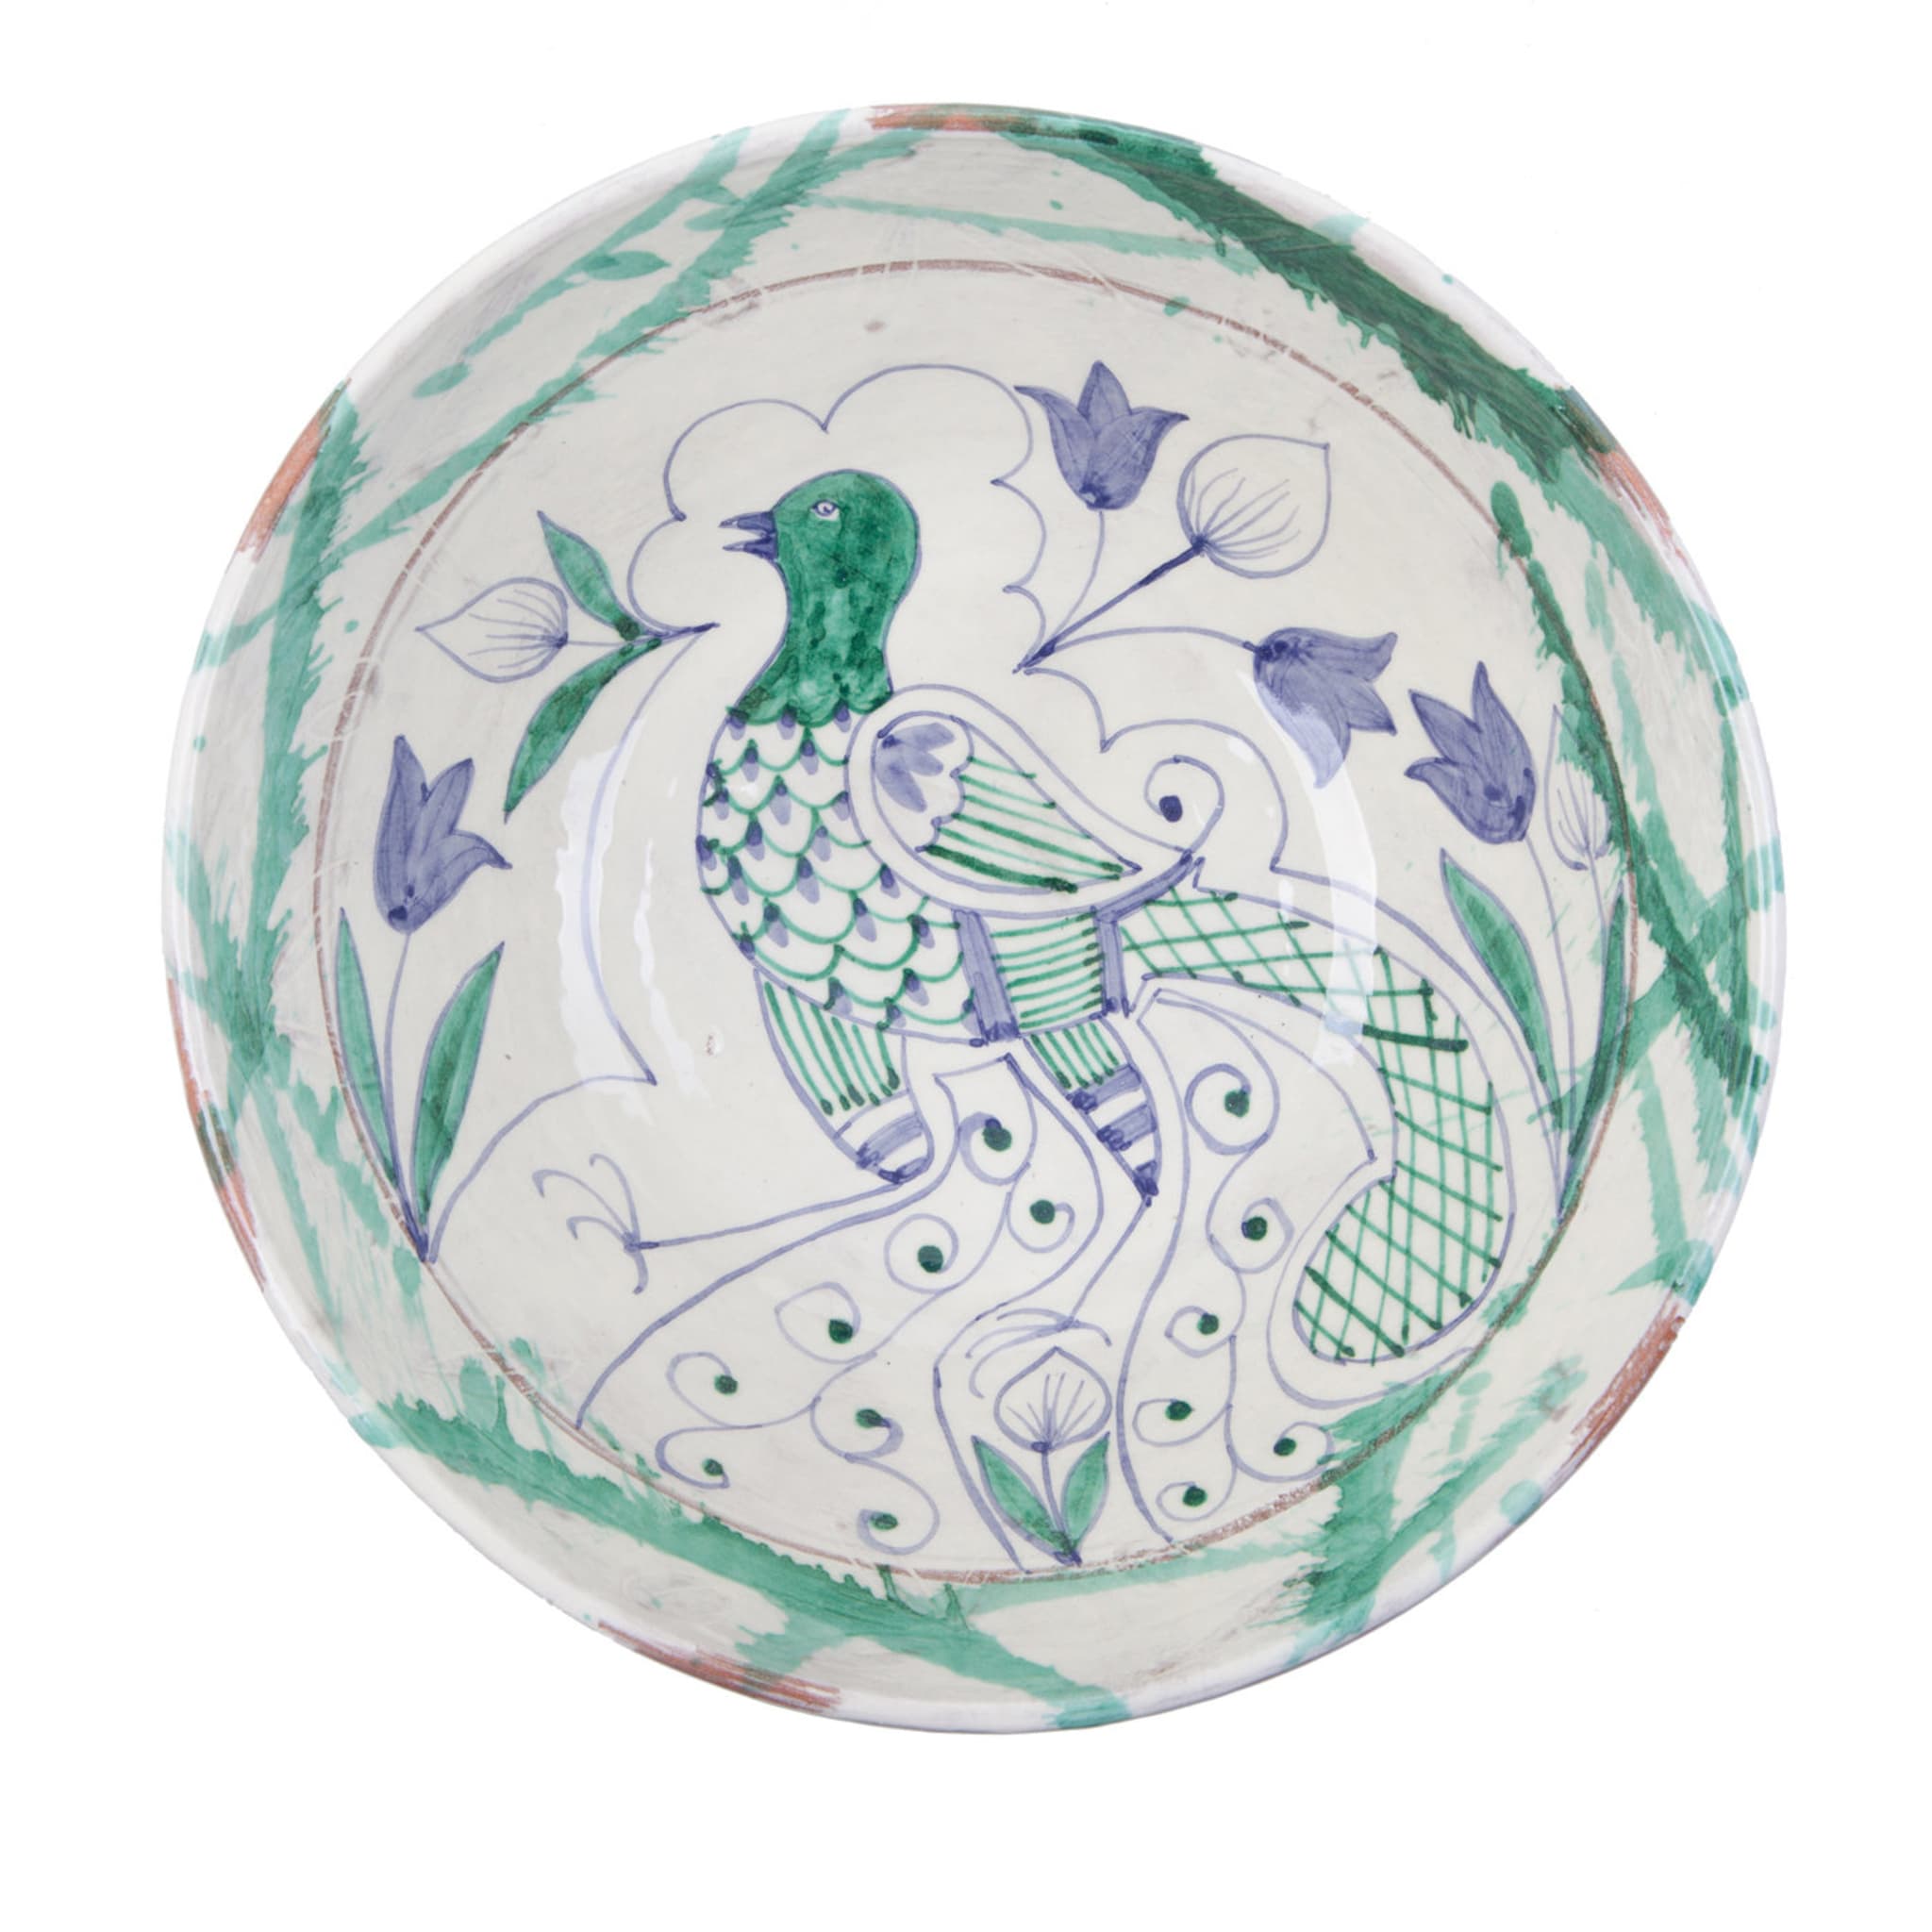 4er-Set Pavone-Keramik-Teller - Hauptansicht